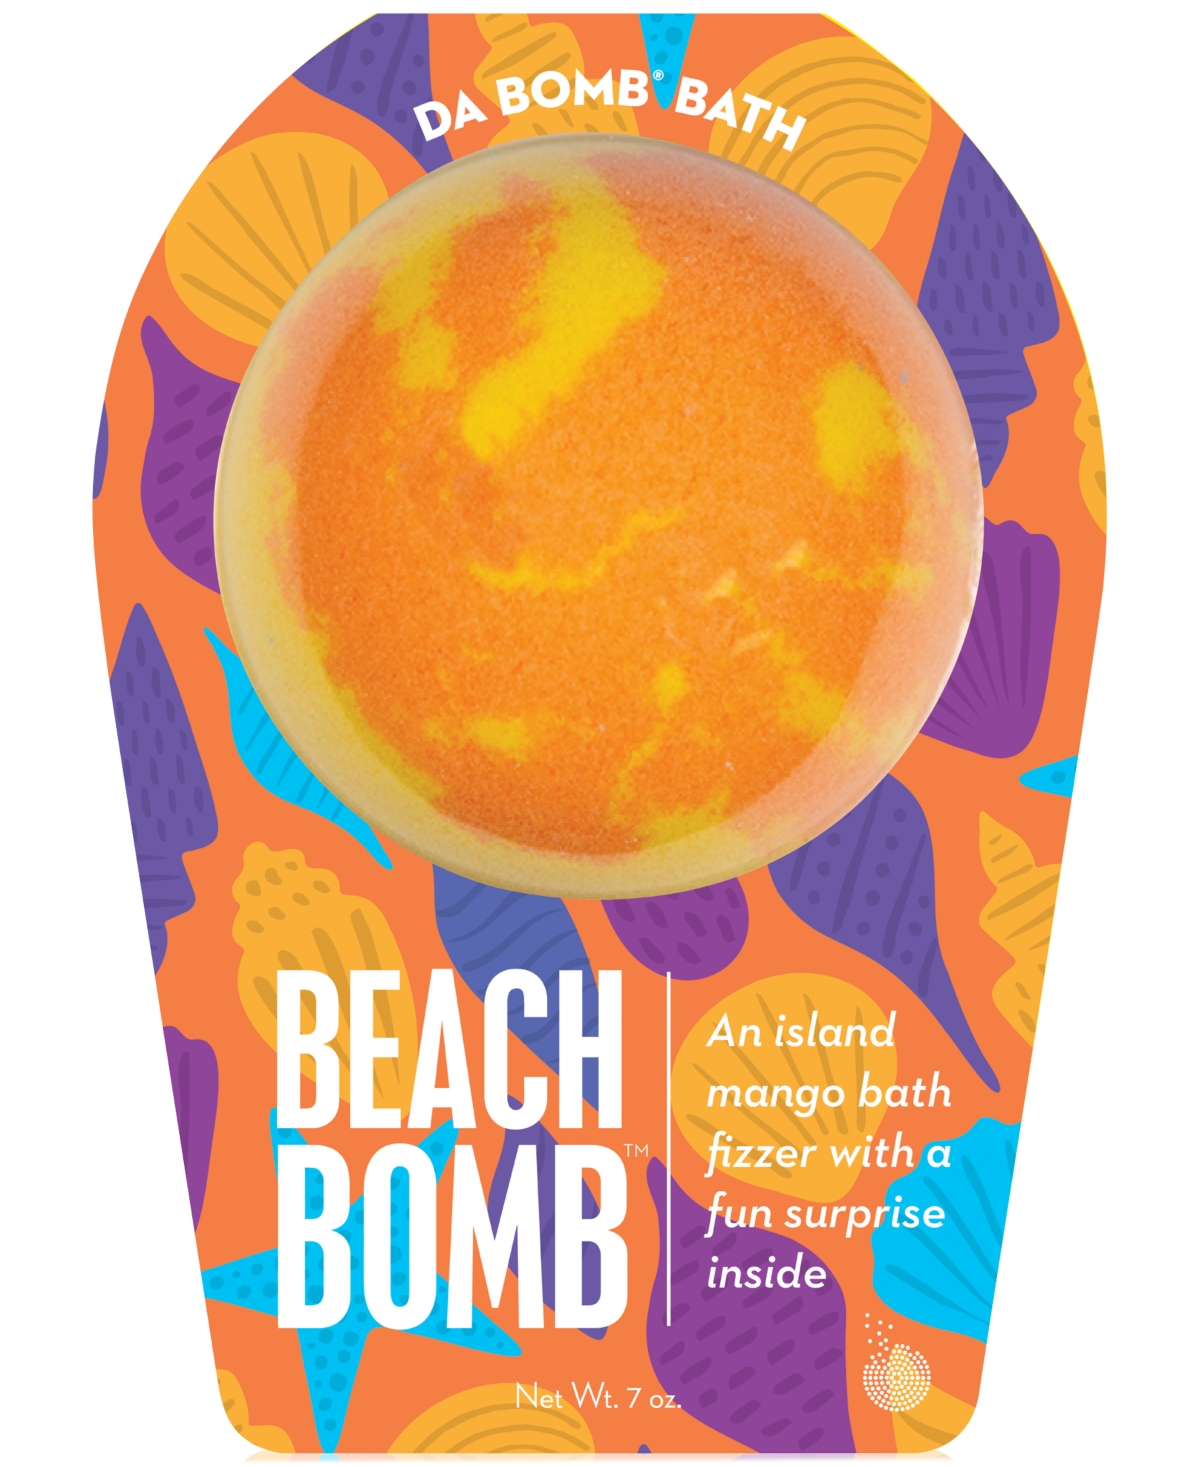 Da Bomb Beach Bath Bomb, 7 Oz.